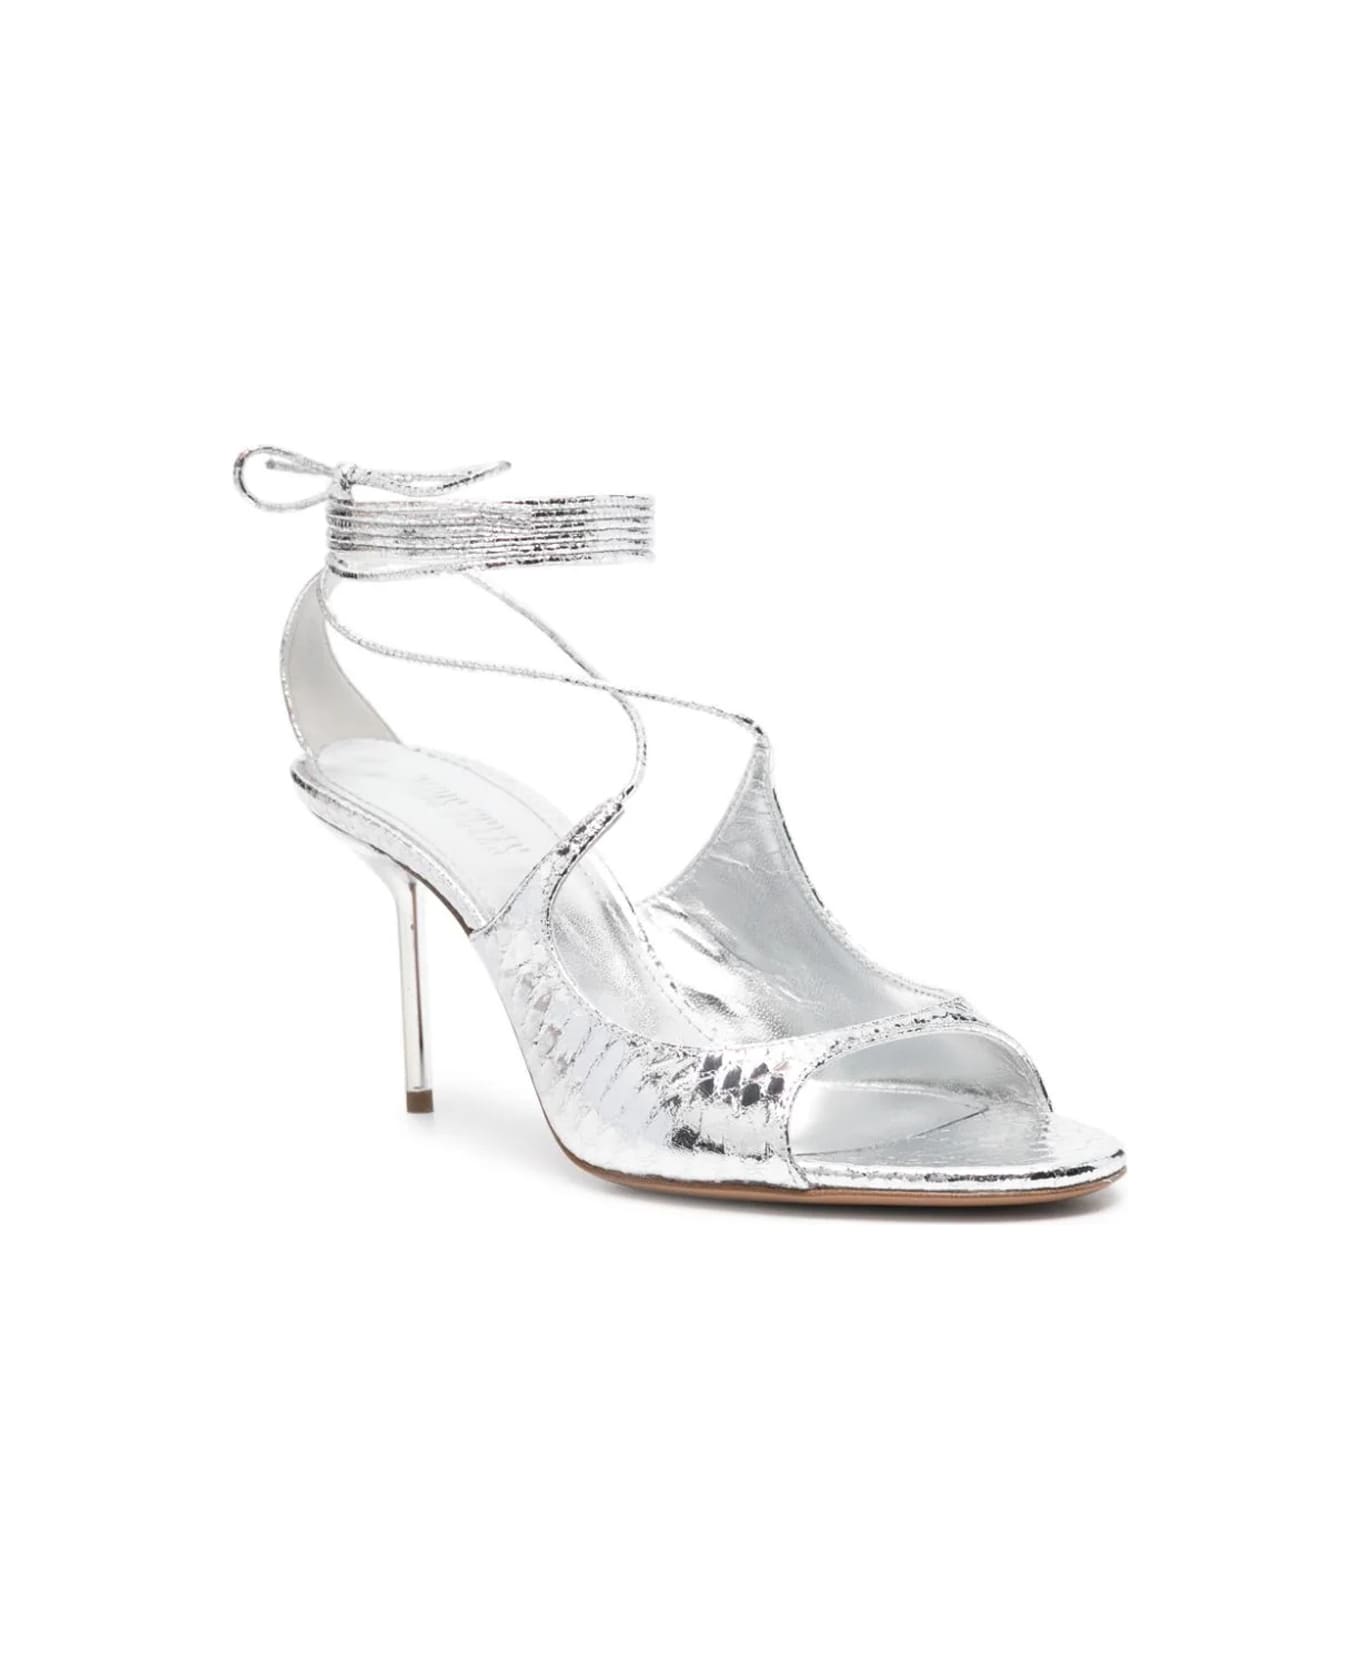 Paris Texas Heeled Sandals - Silver